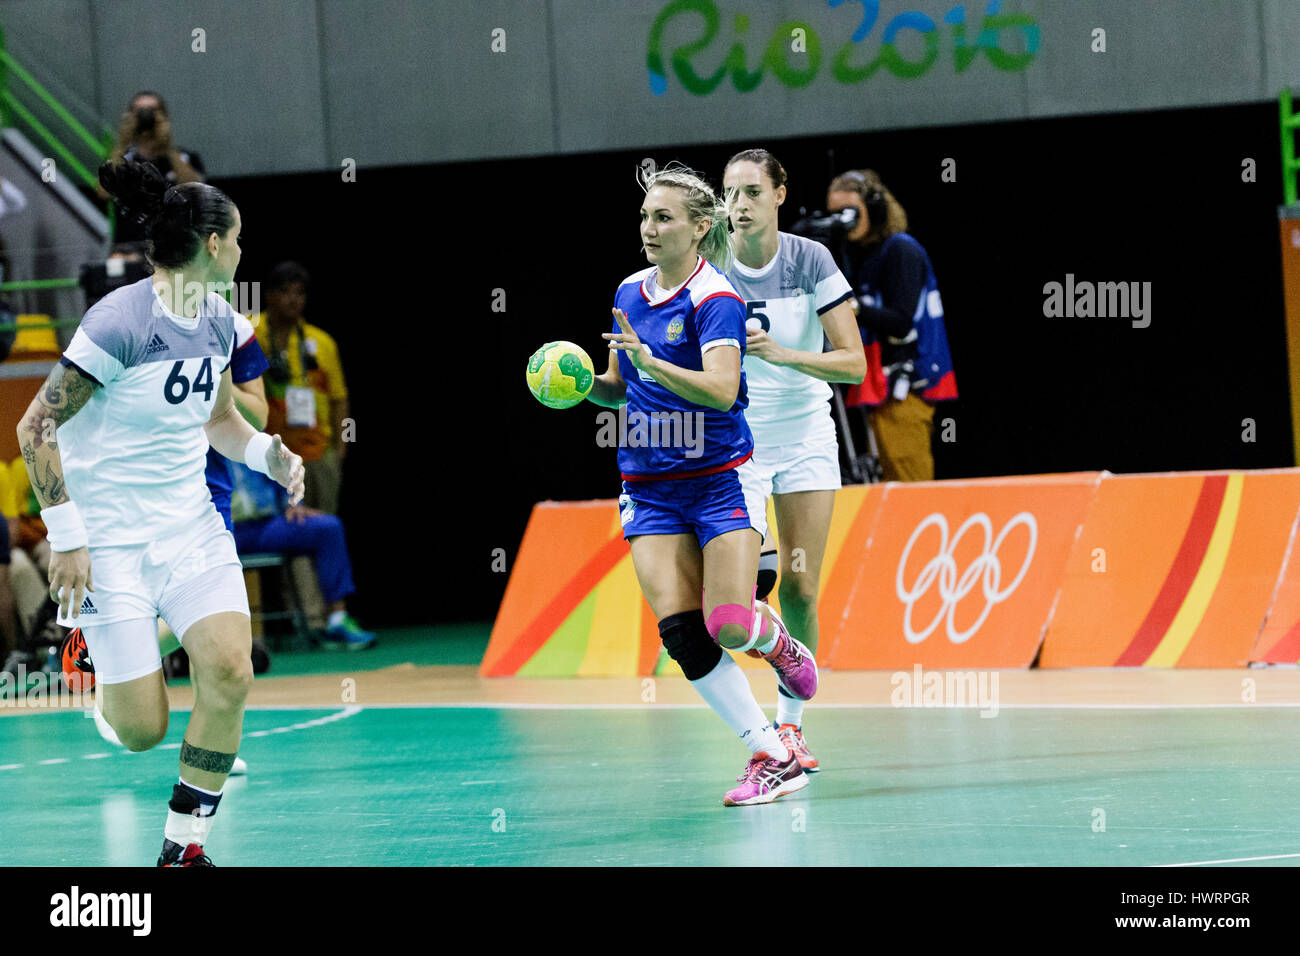 Rio de Janeiro, Brazil. 20 August 2016 Polina Kuznetsova (RUS) #2 competes in the women's handball gold medal match Russia vs. France at the 2016 Olym Stock Photo